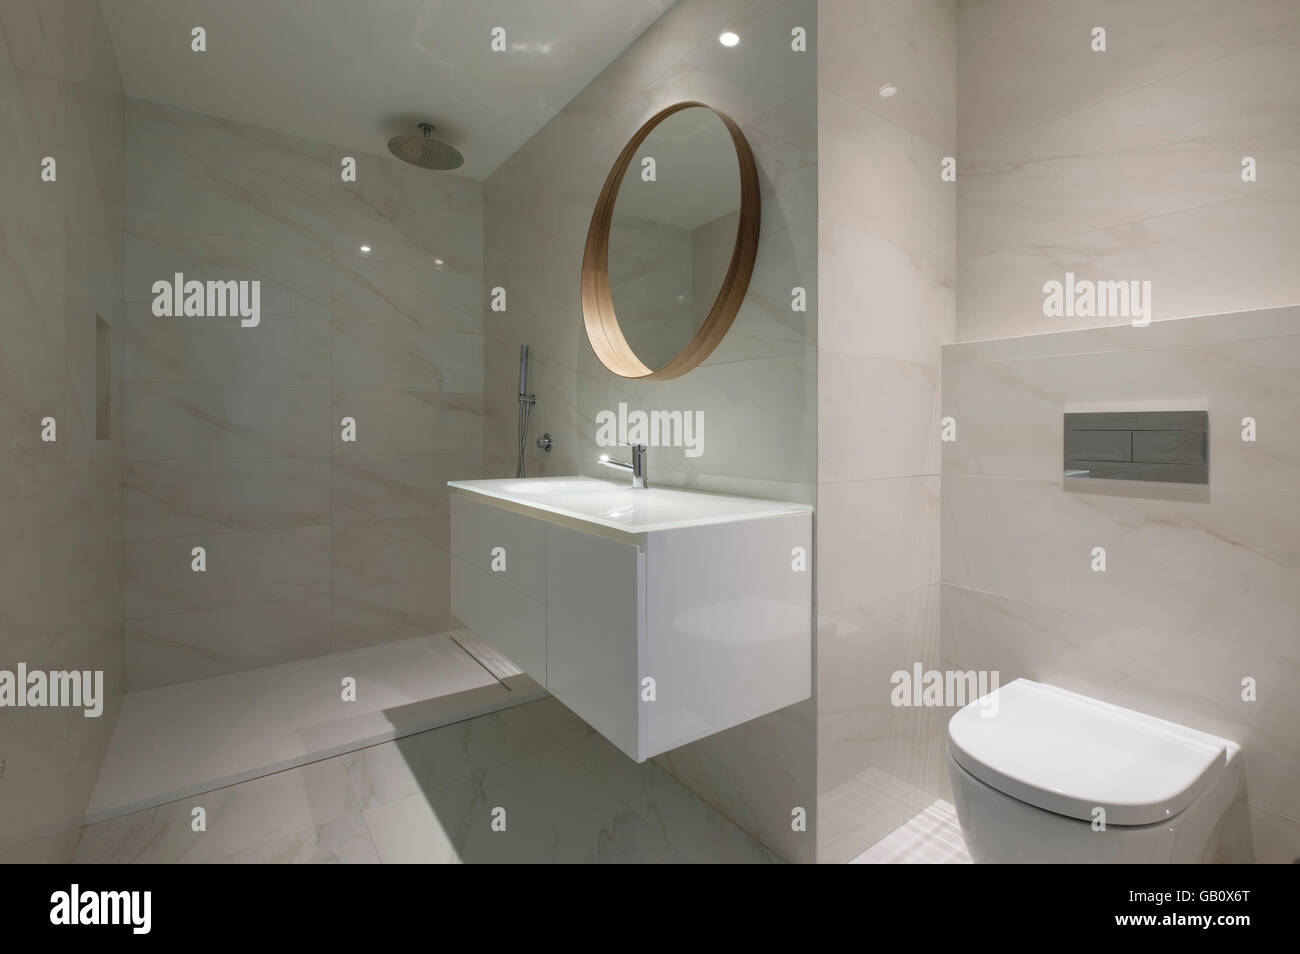 https://c8.alamy.com/comp/GB0X6T/modern-bathroom-with-marble-walls-and-a-big-round-mirror-GB0X6T.jpg